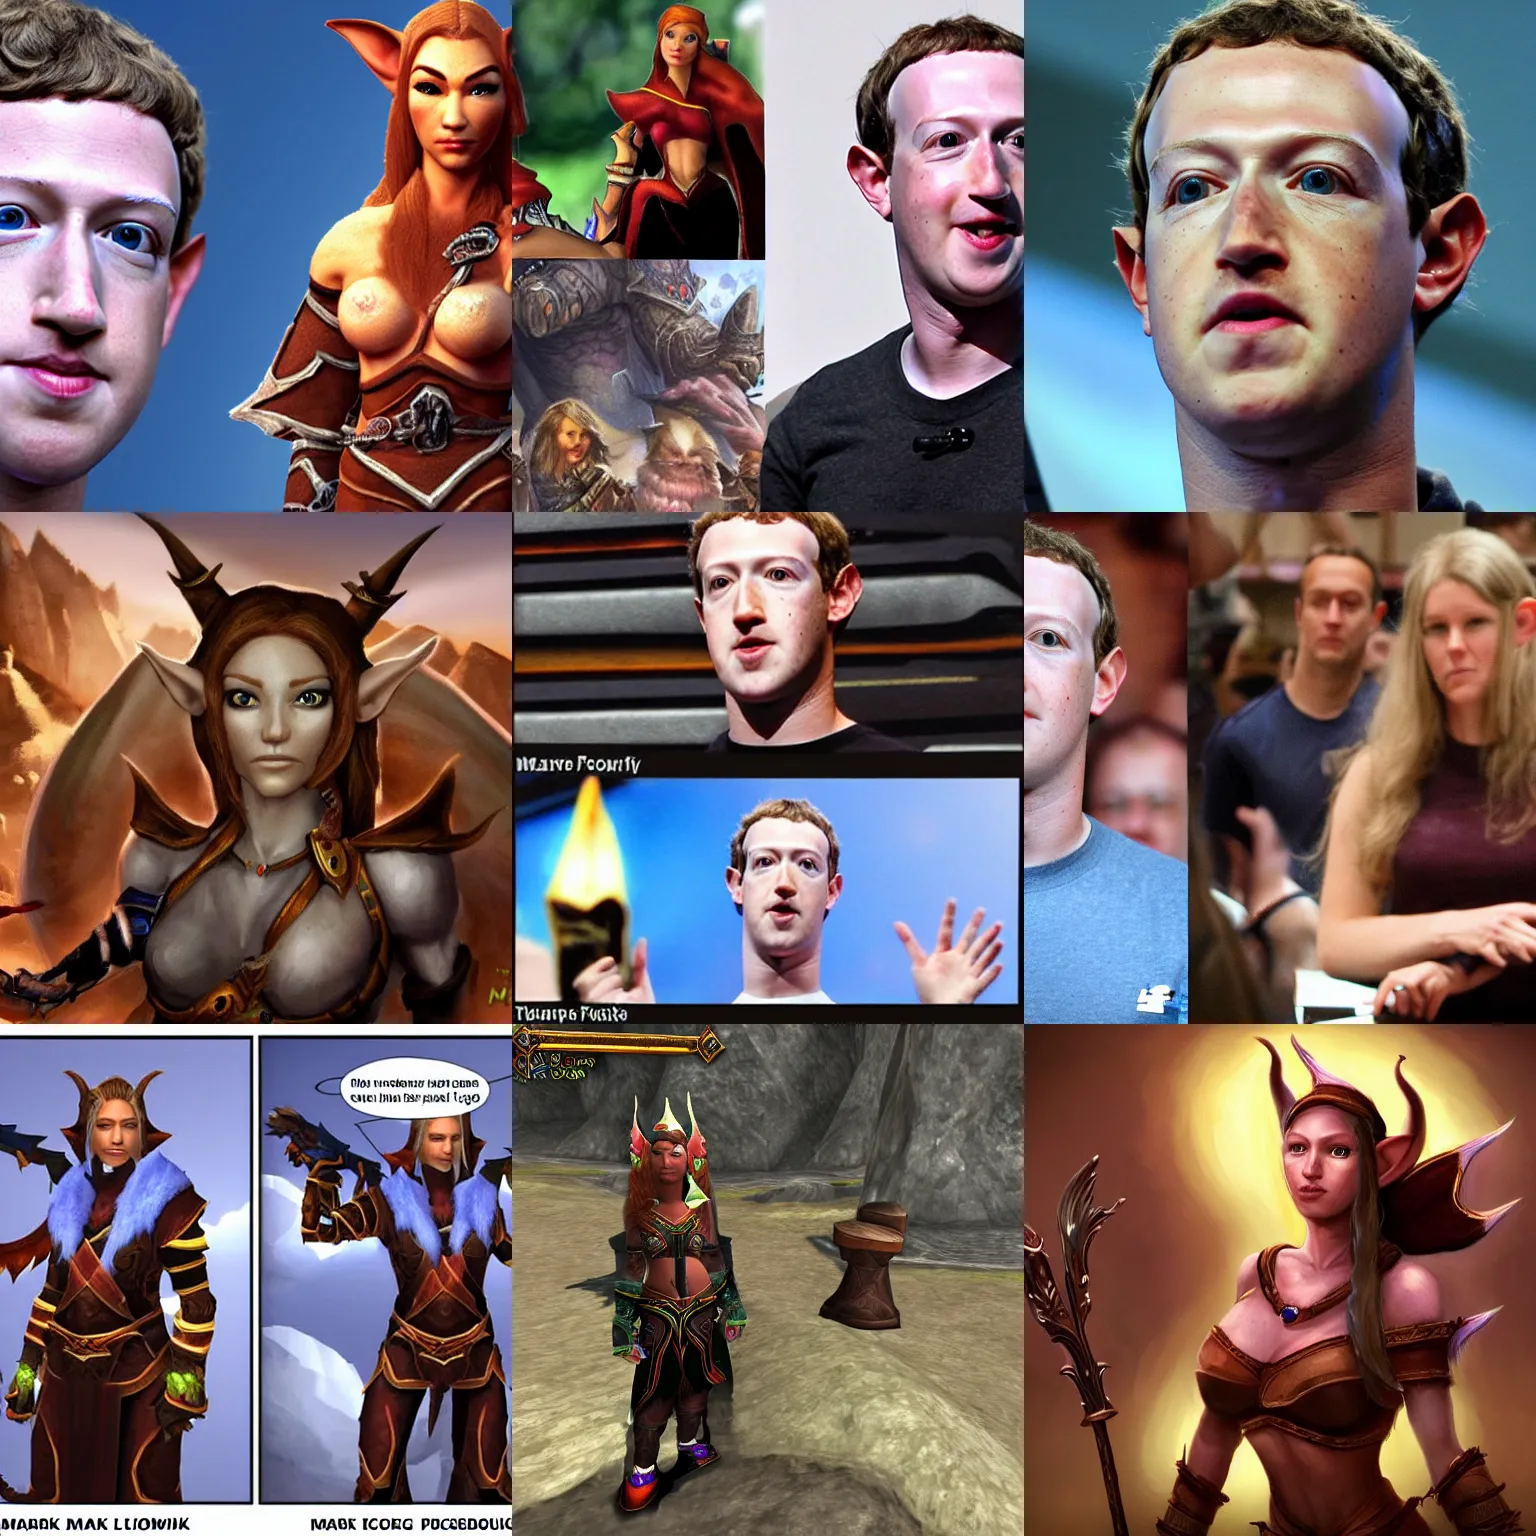 Prompt: Mark Zuckerberg is a beautiful elf huntress from World of Warcraft